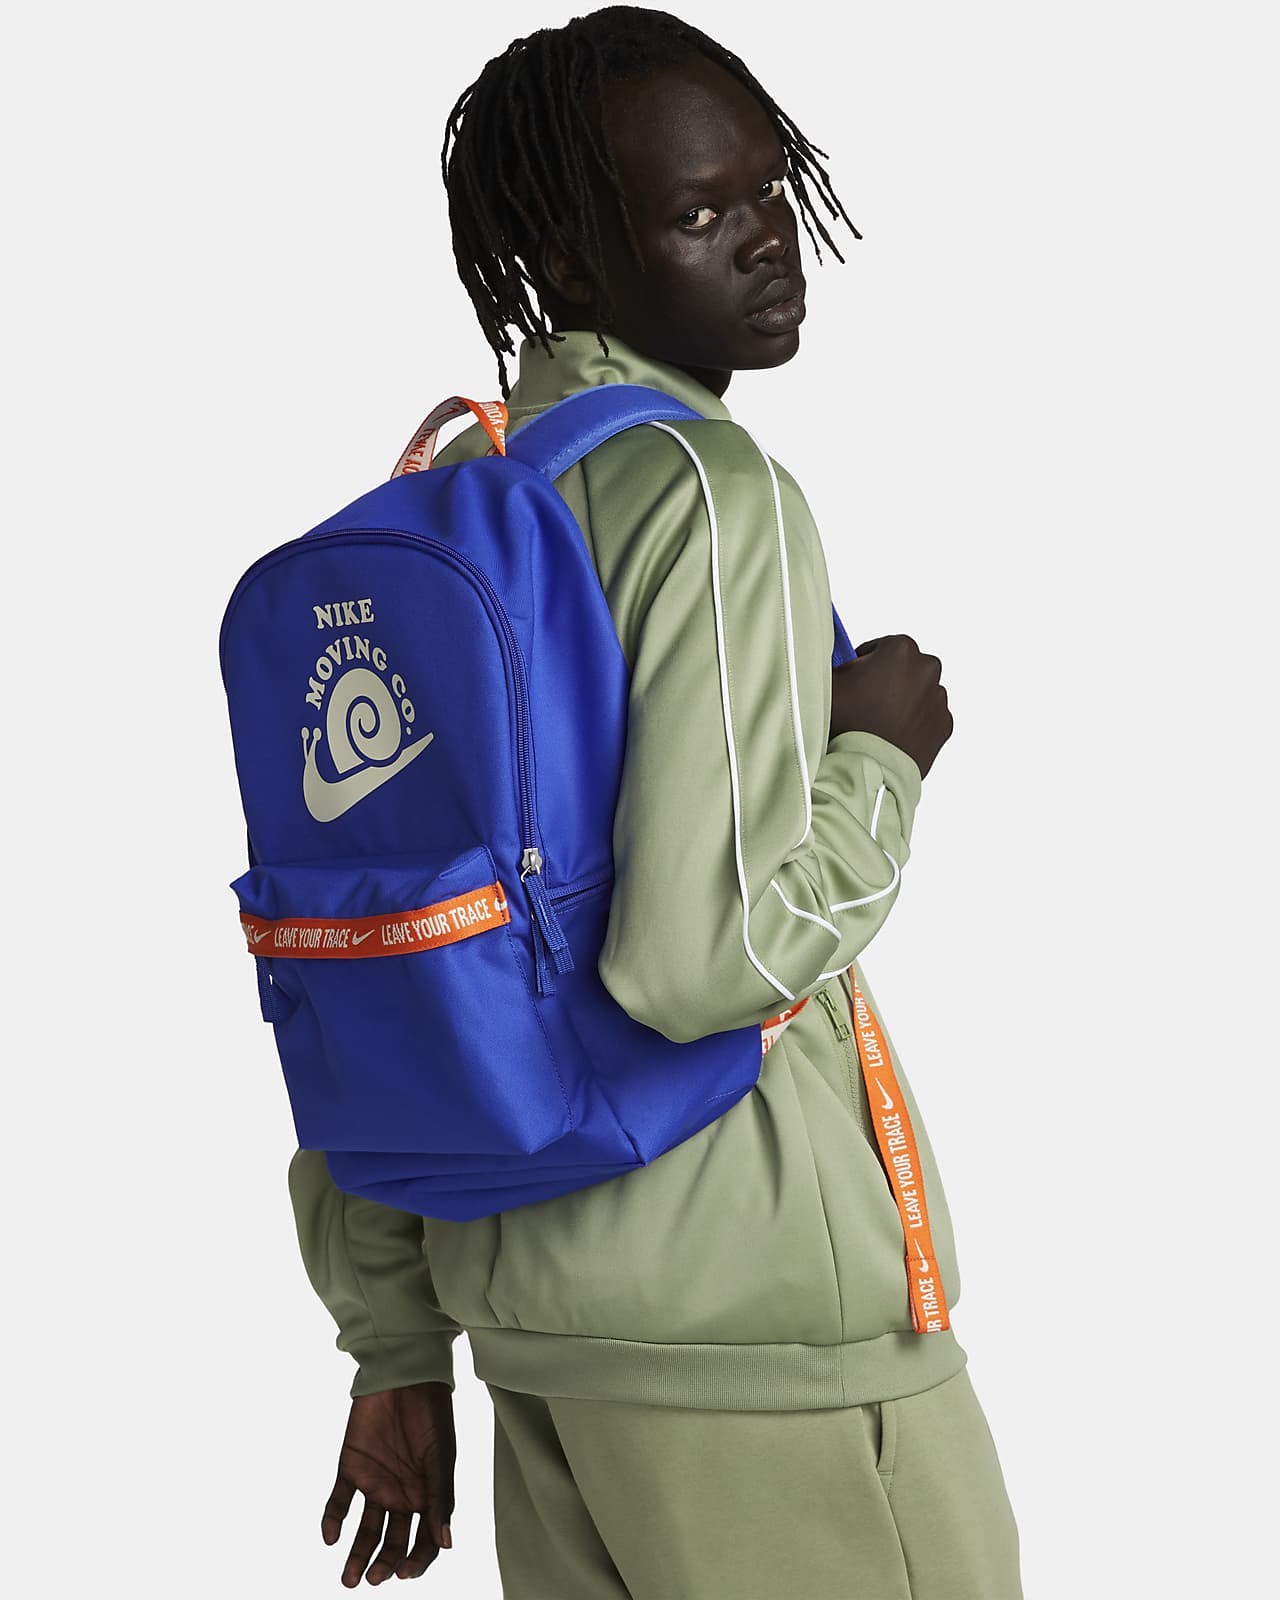 Blue) Nike Bag Rucksack Girls Boys Gym Travel school bag on OnBuy